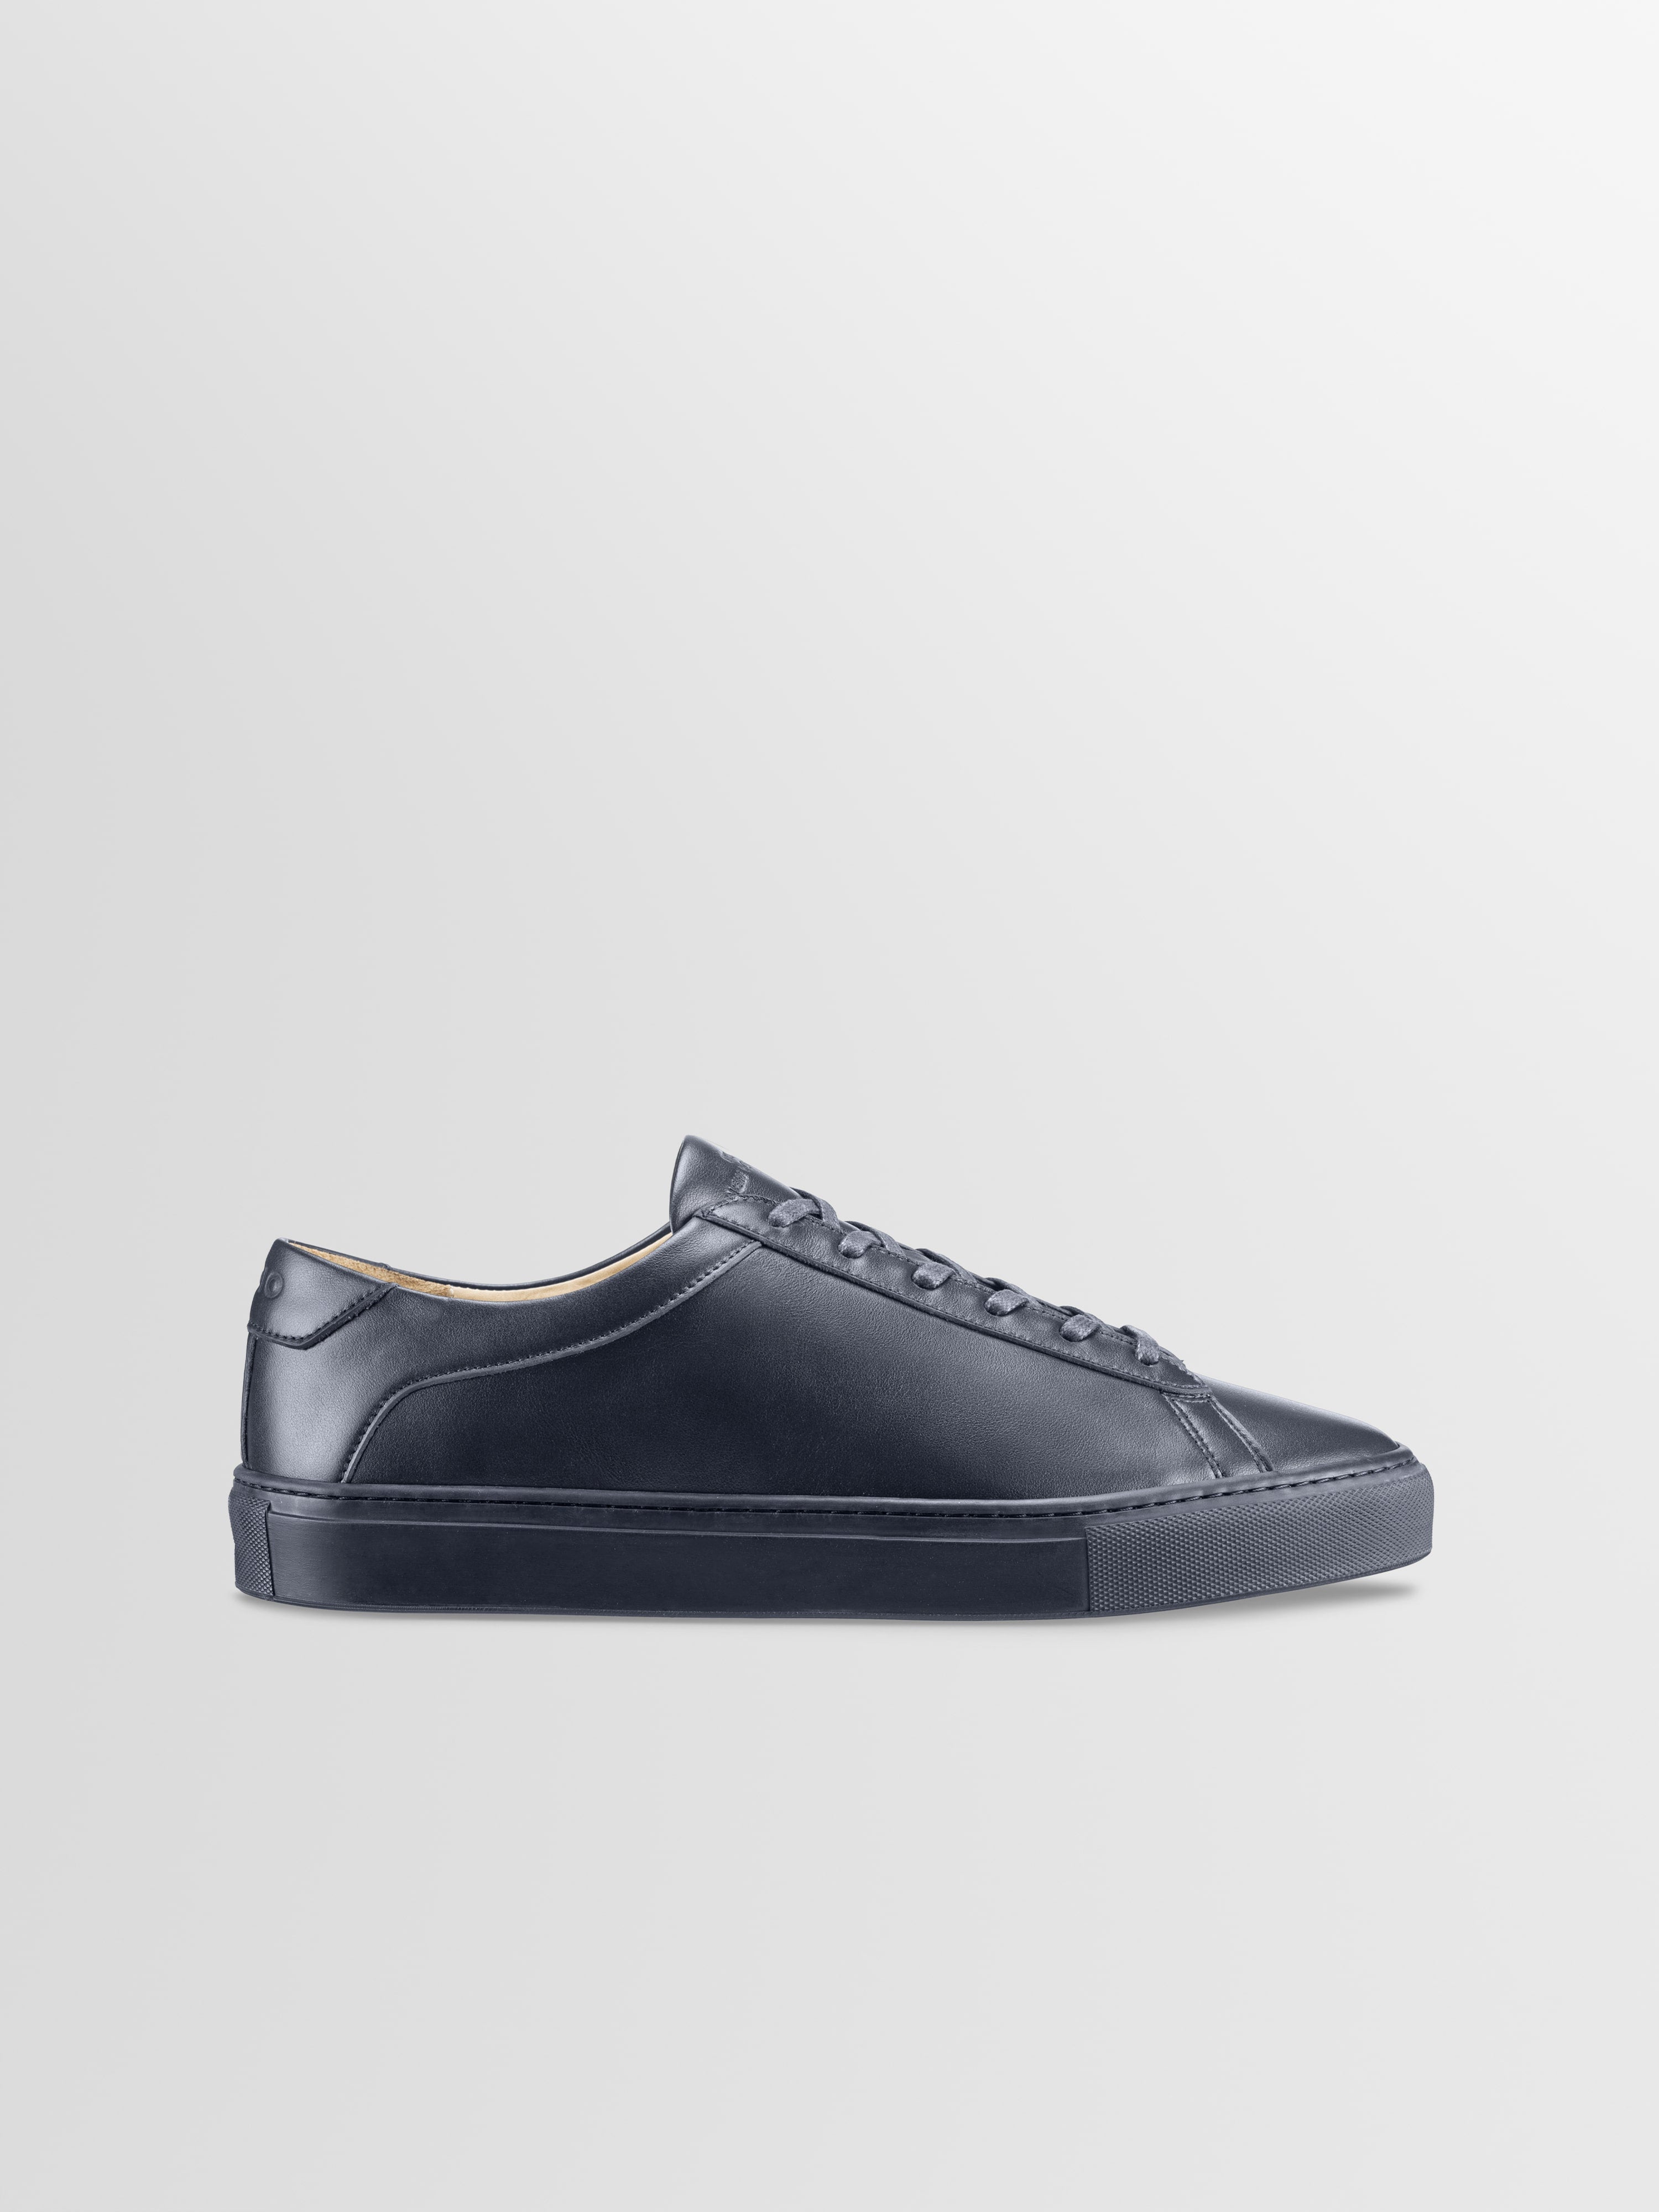 Men's Navy Leather Low-top Sneaker | Capri in Space | Koio – KOIO